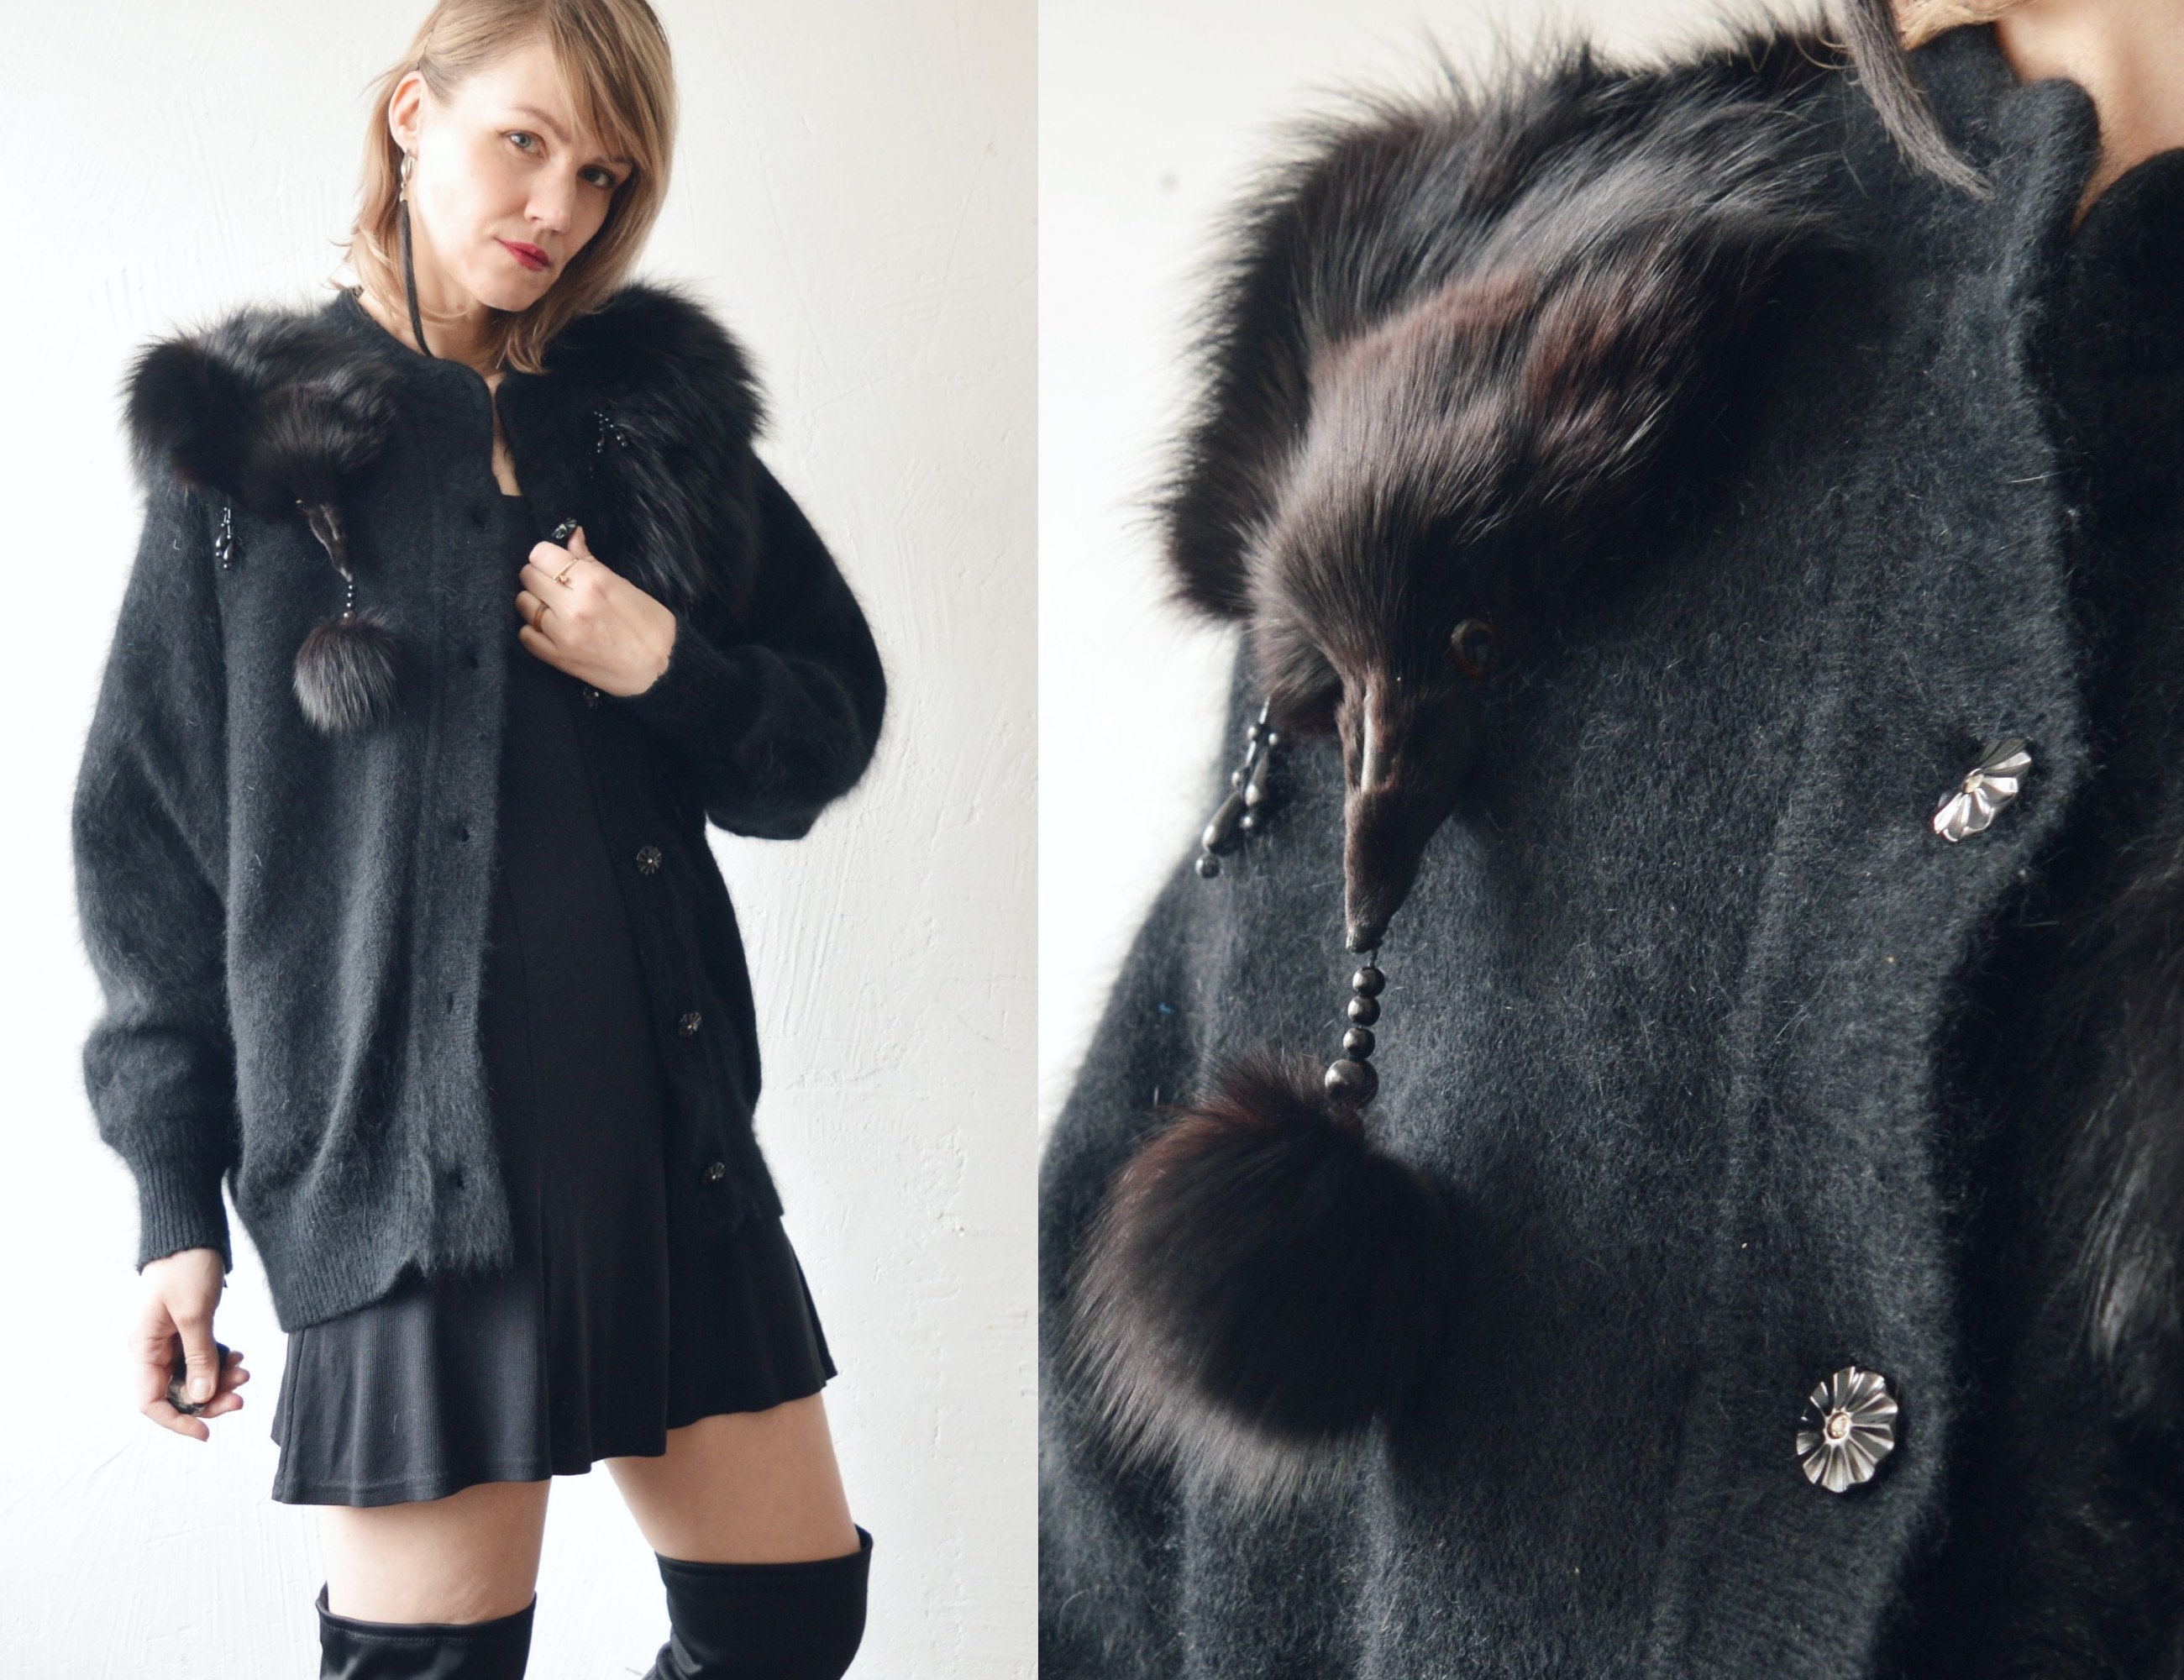 Women's Faux Fur Trim Cardigan Sweater in Black Size Large | Chico's